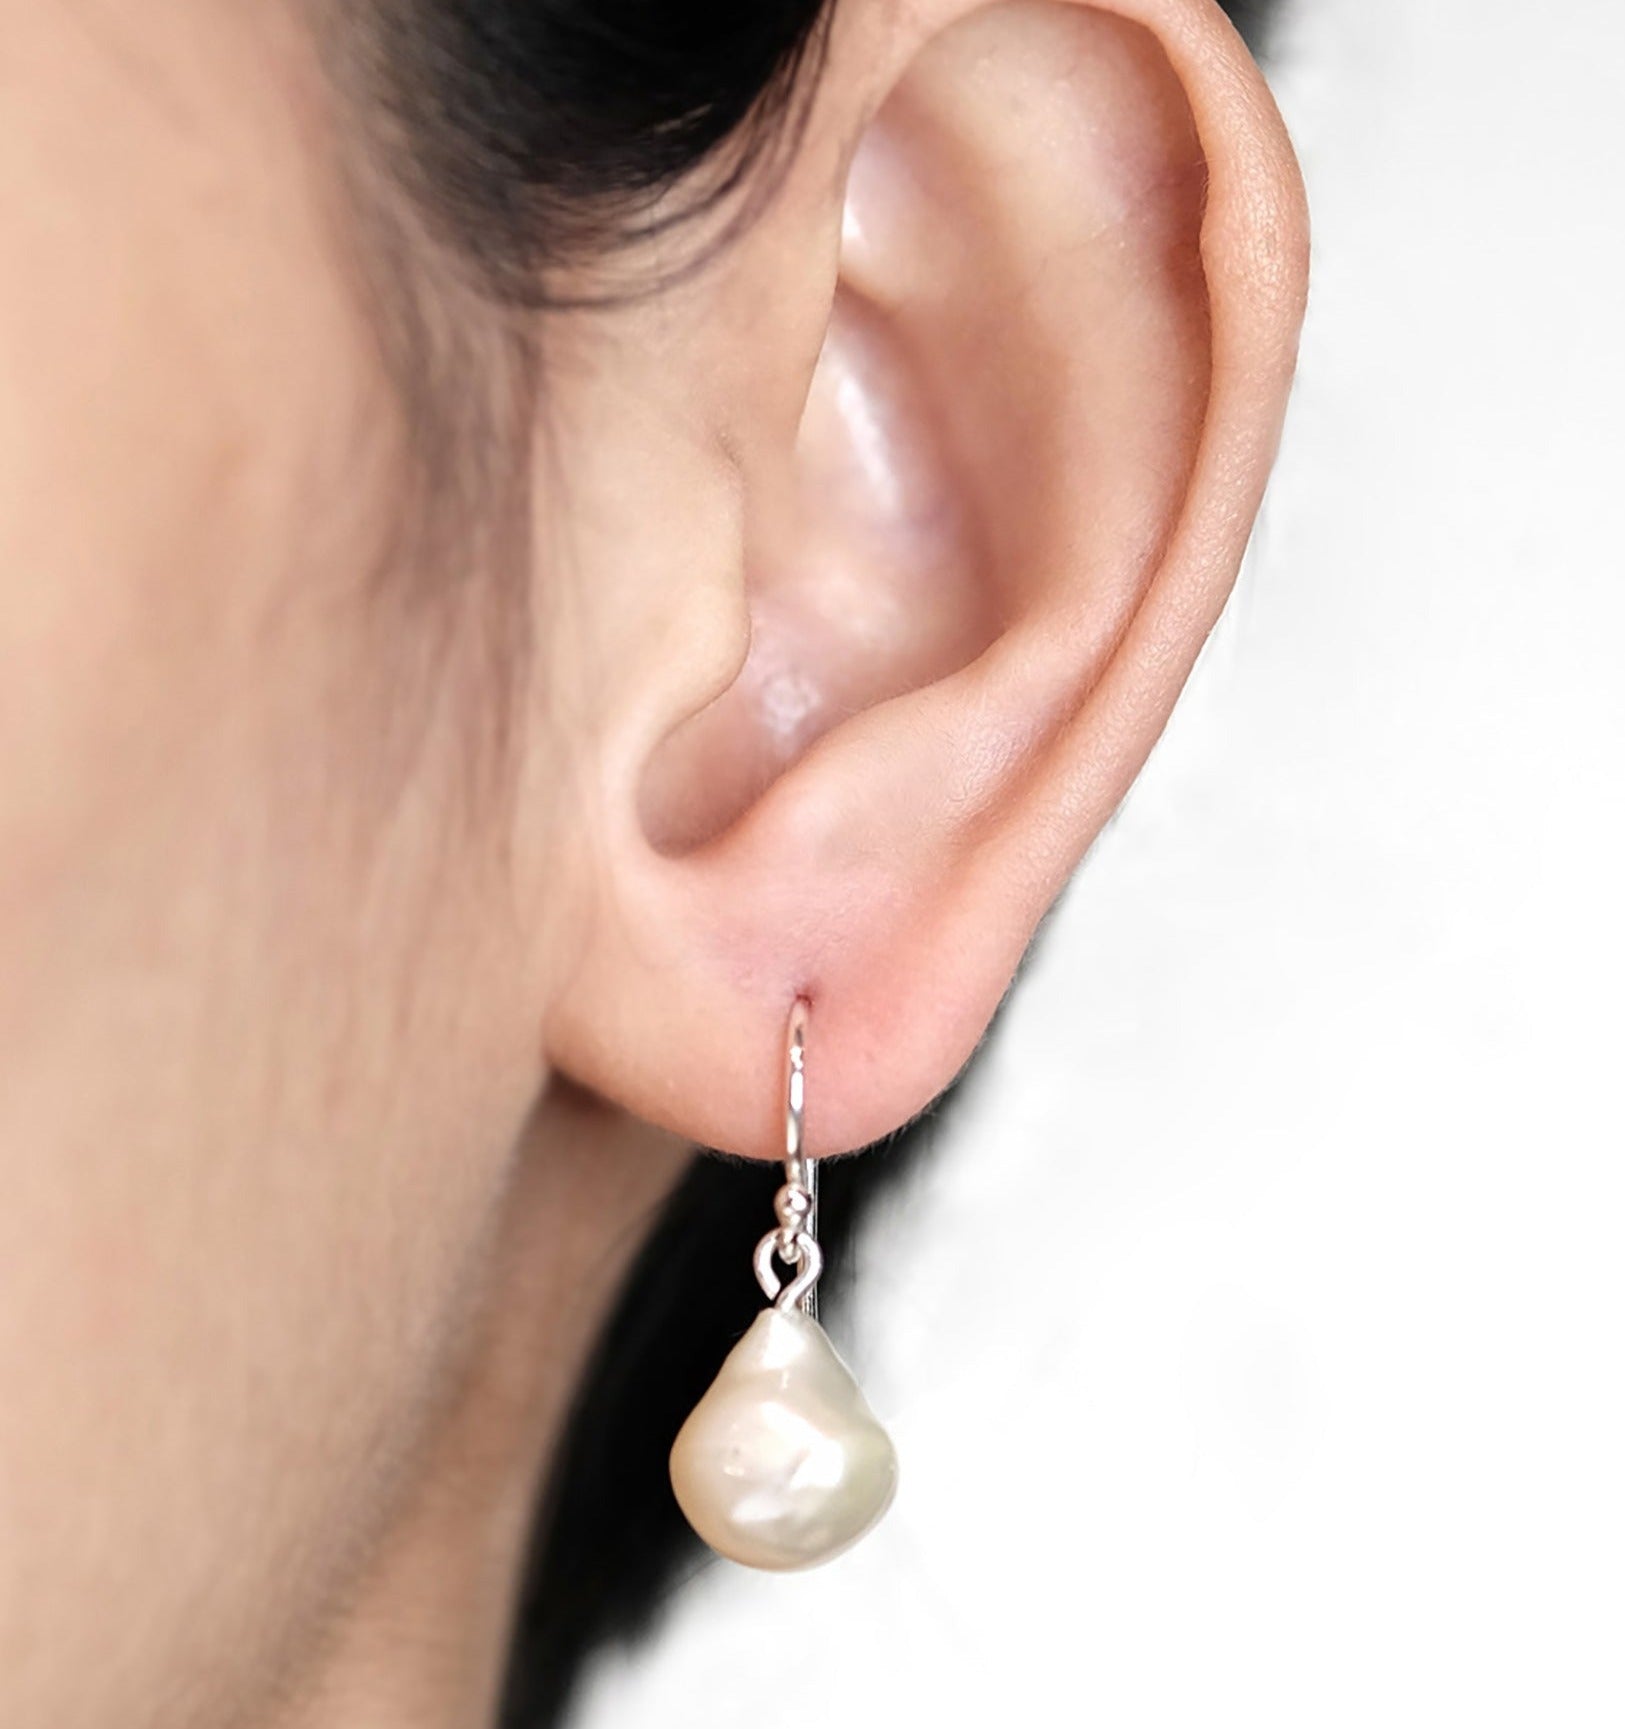 The Madstone pearl earrings